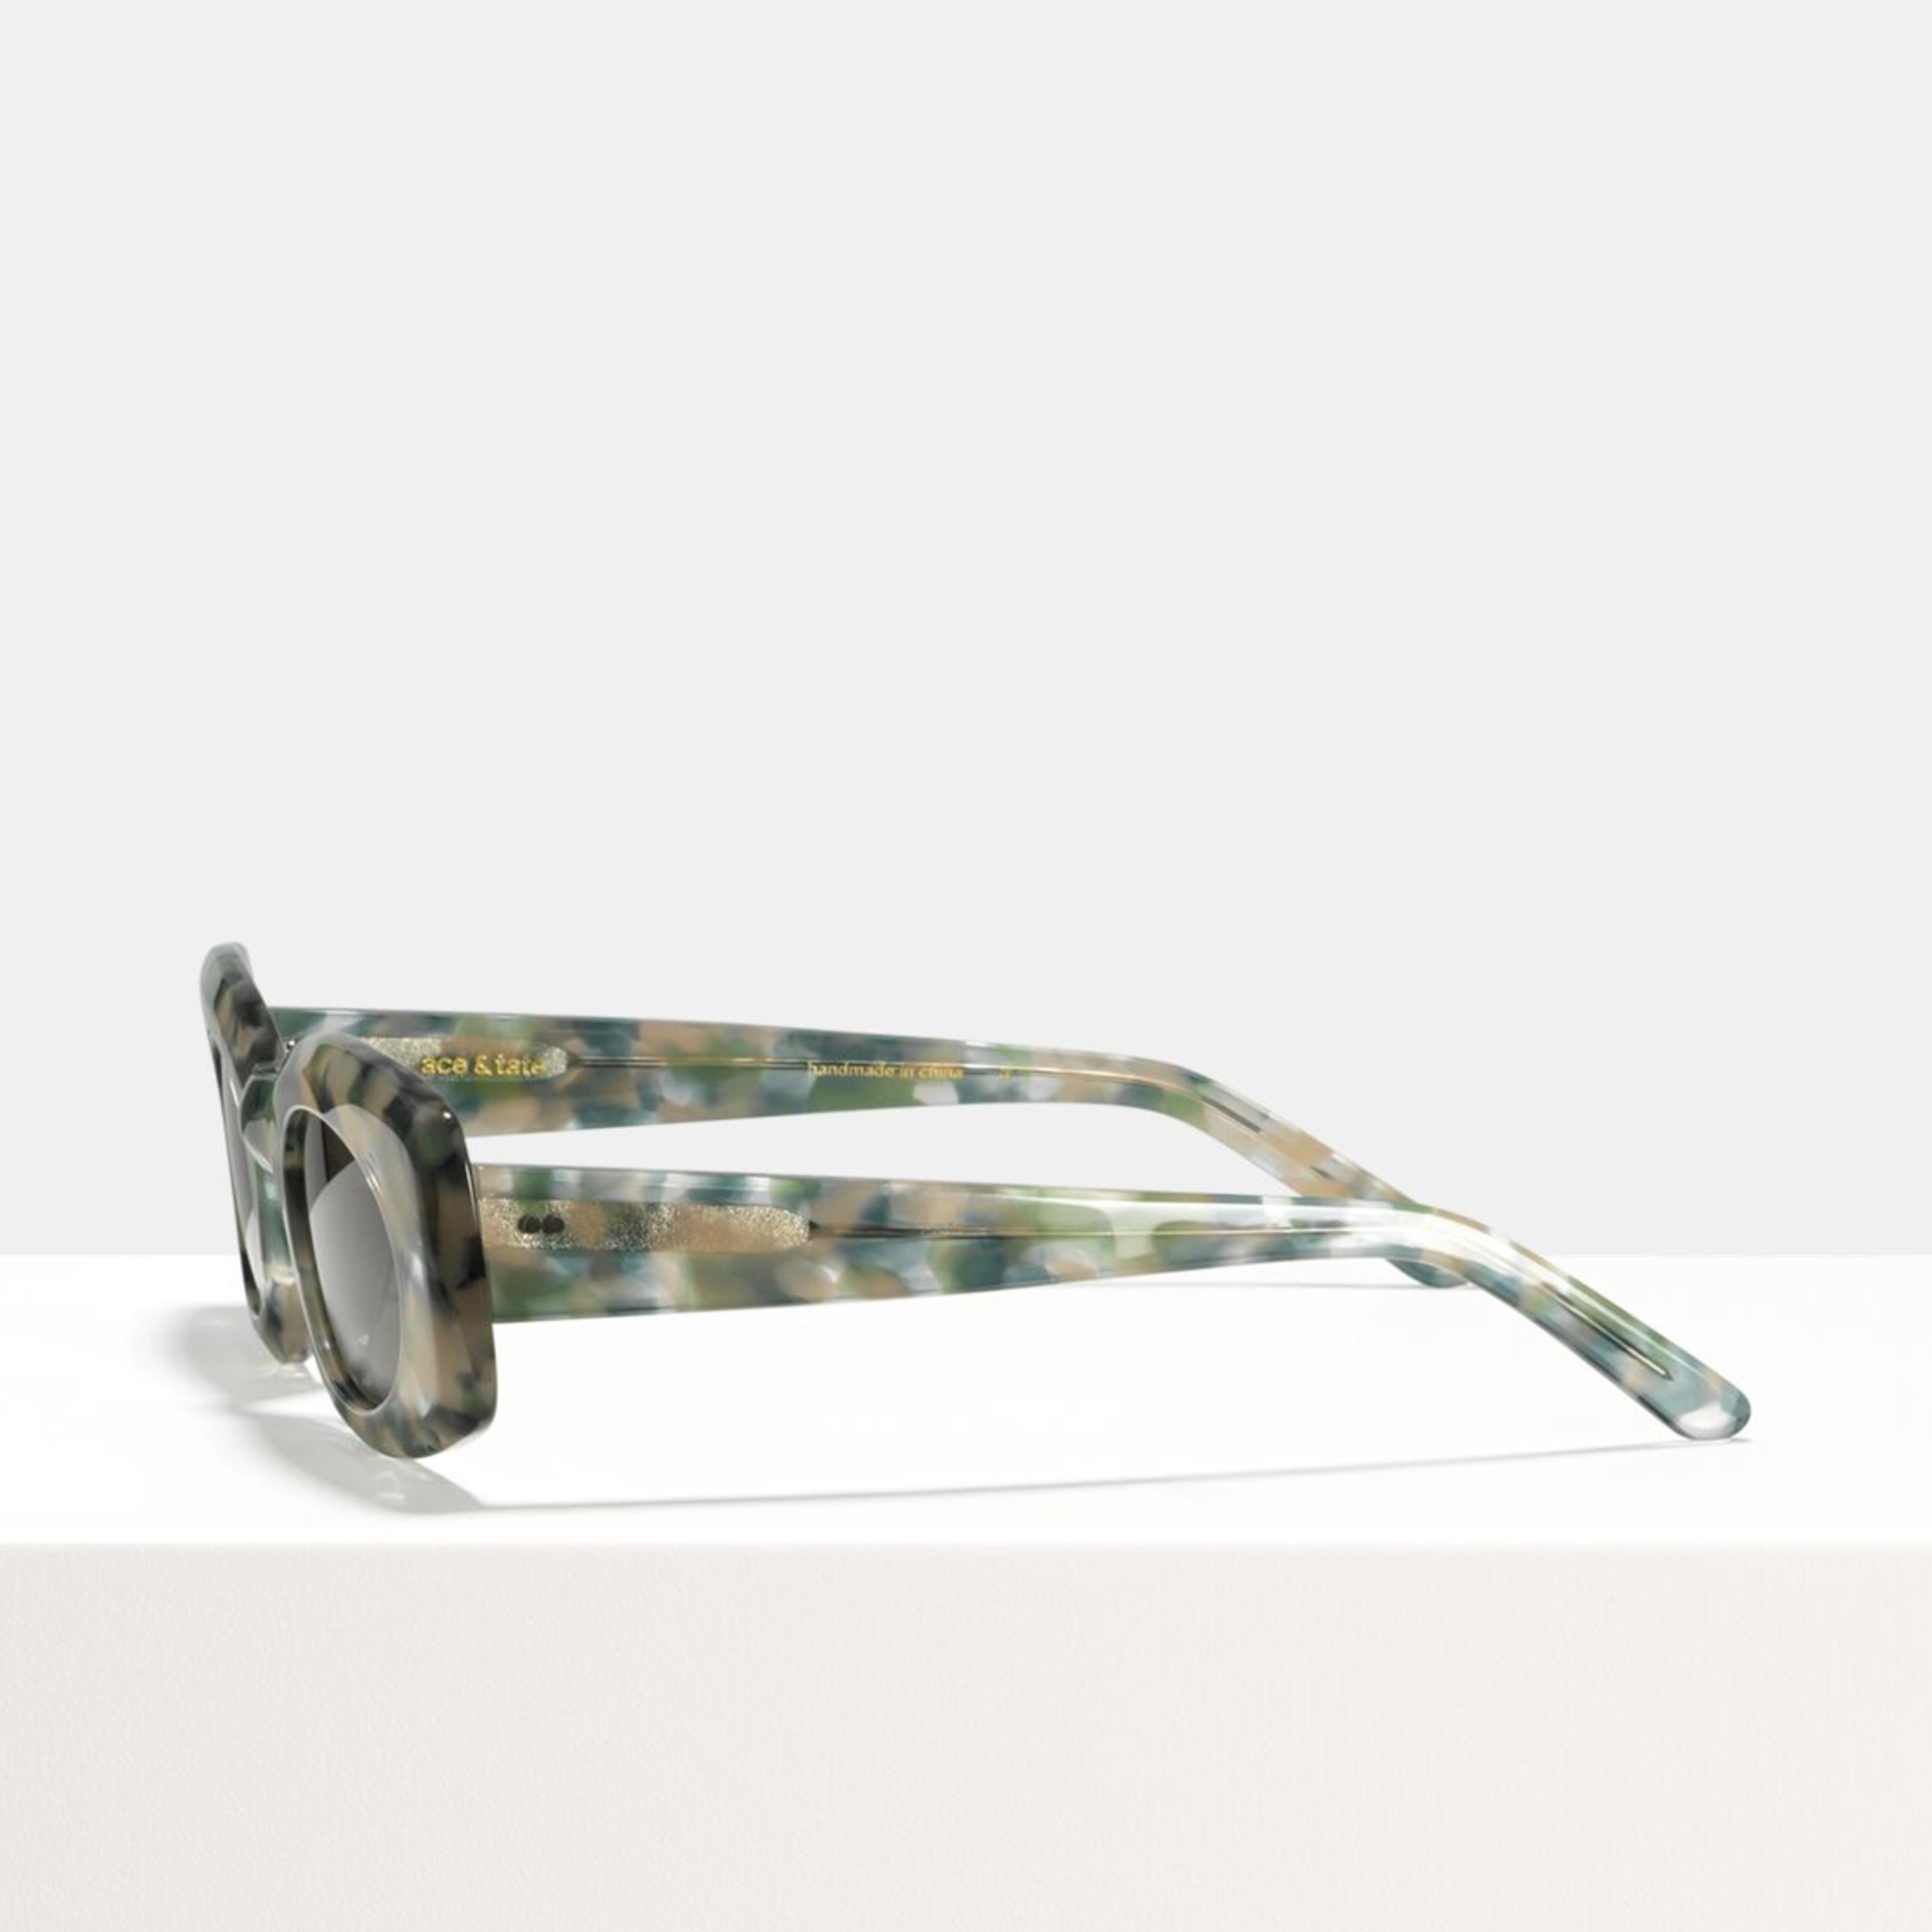 Ace & Tate Sonnenbrillen | oval Acetat in Beige, Blau, Grün, Grau